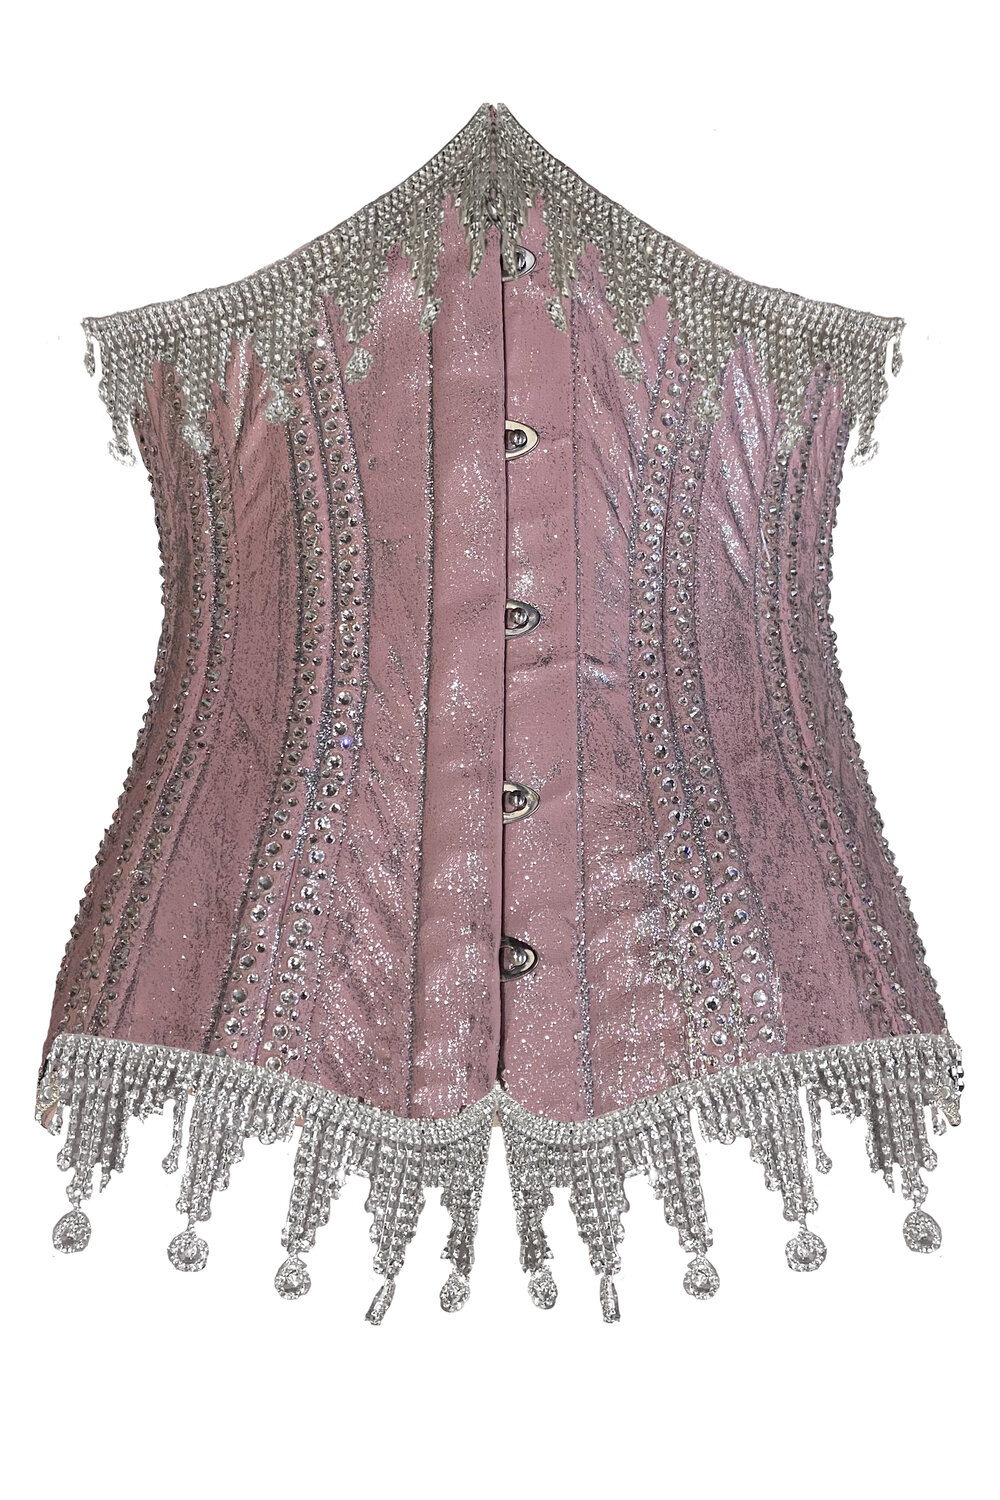 KELSEY RANDALL - FAITH rhinestone drip pink glitter corset